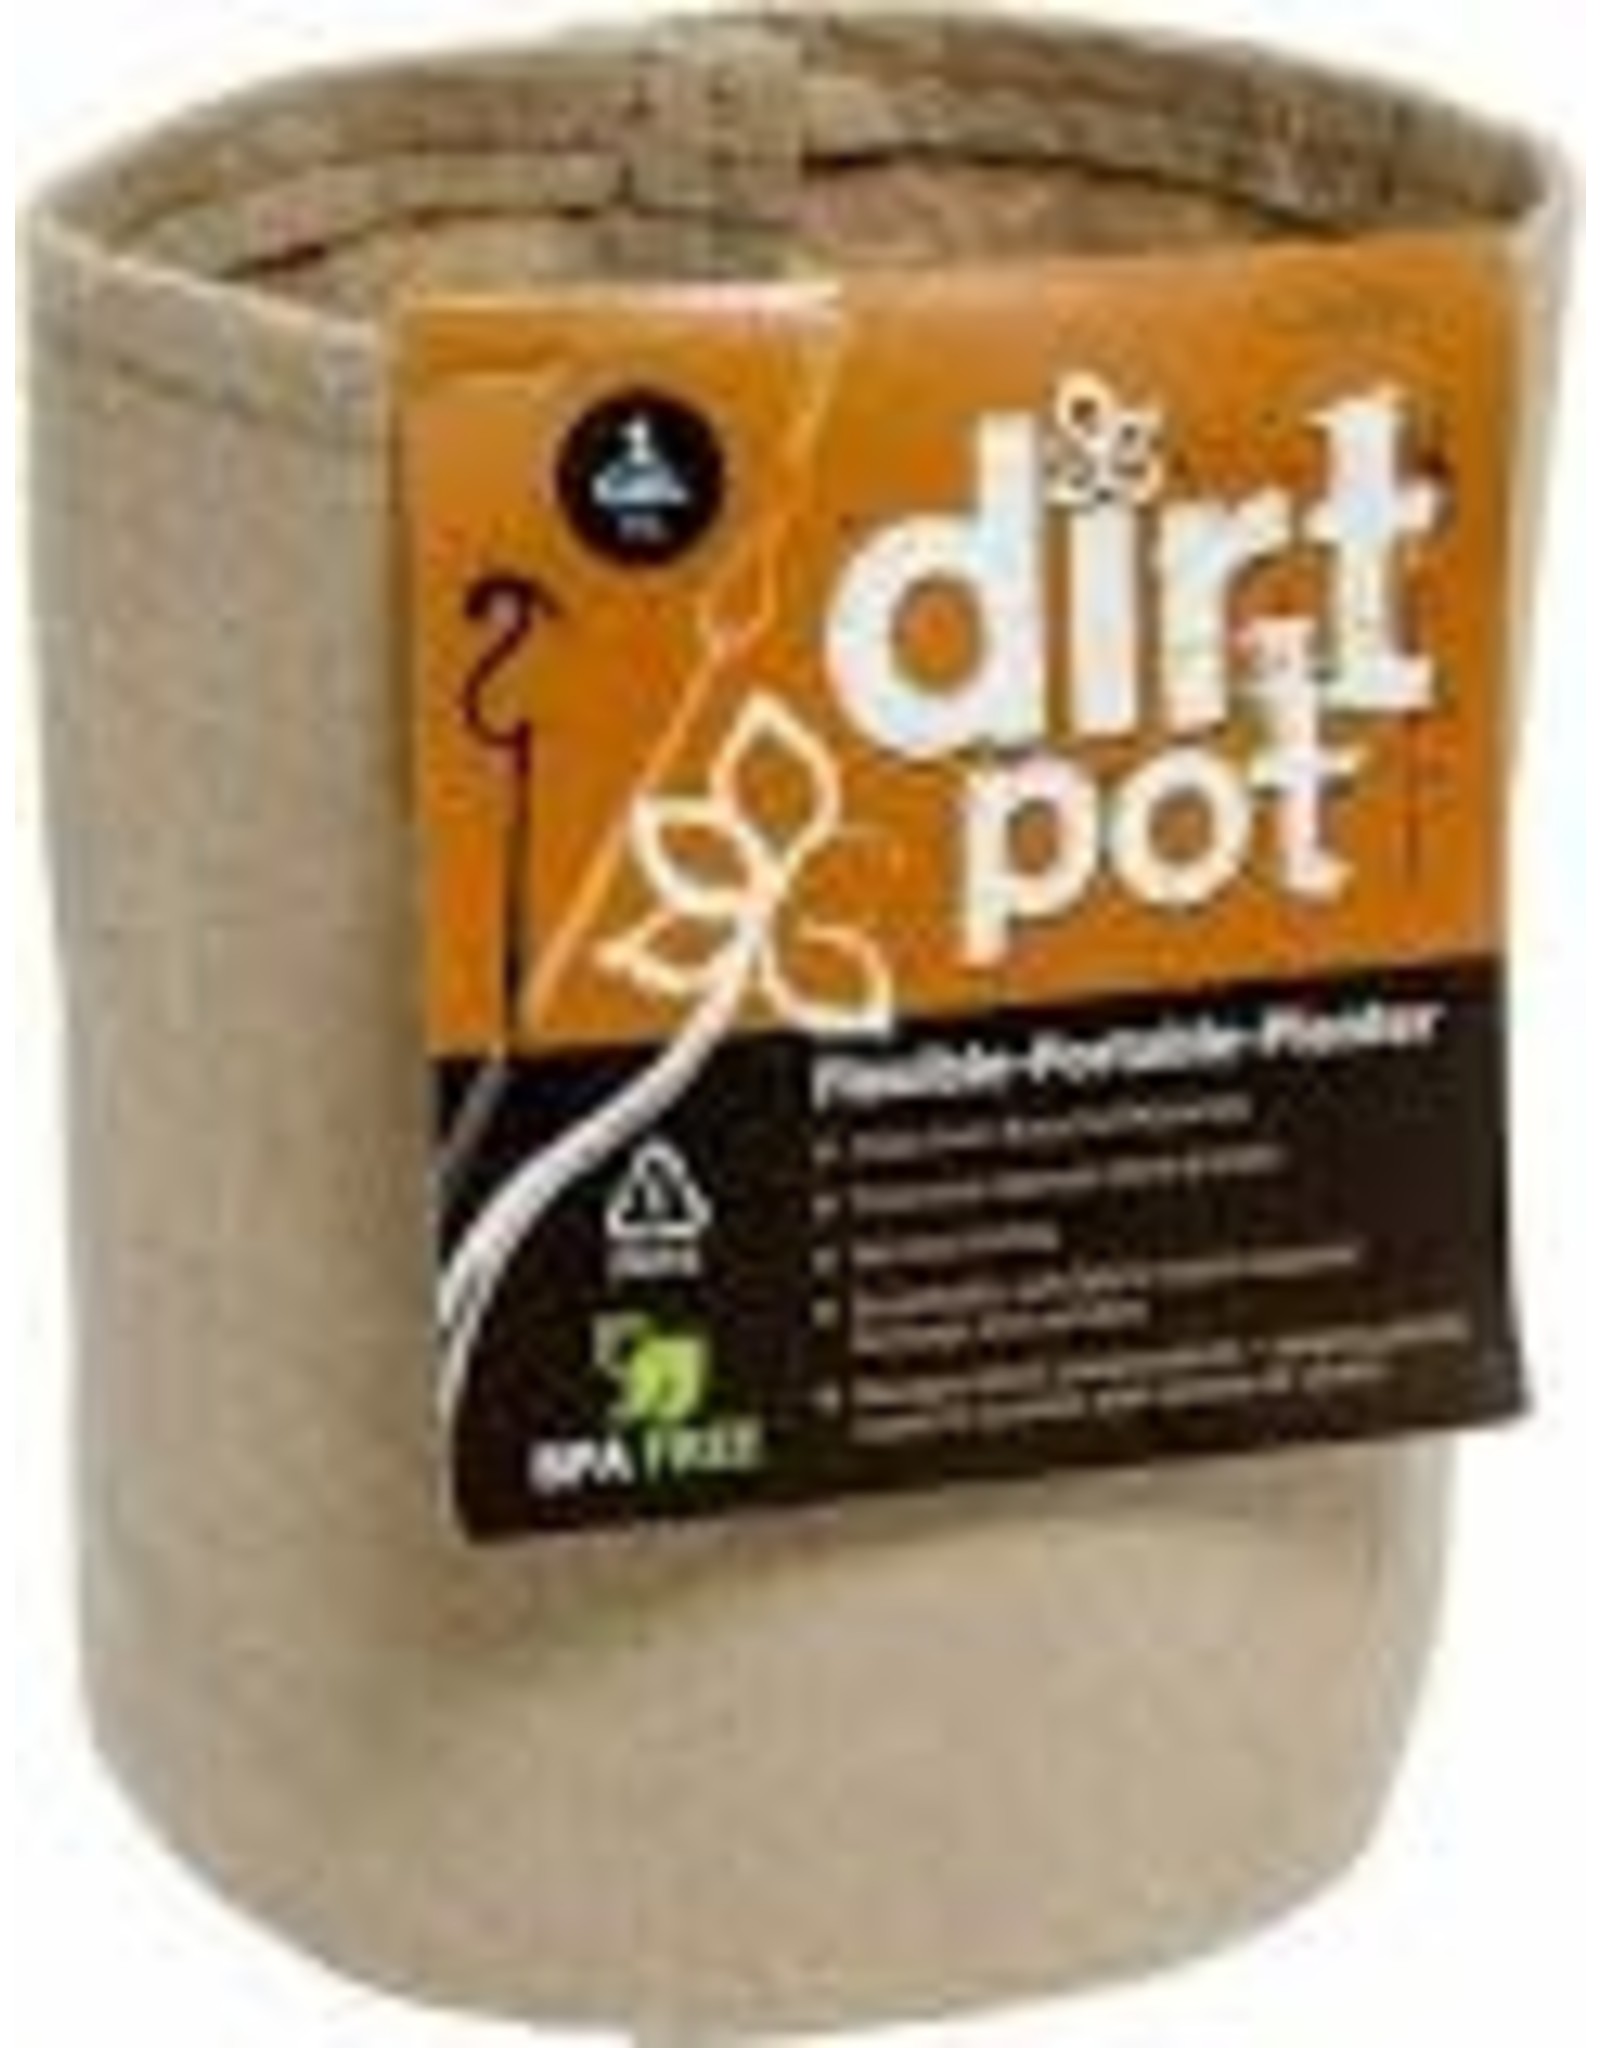 Hydrofarm Dirt Pot Flexible Portable Planter, Tan, 1 gal, no handles